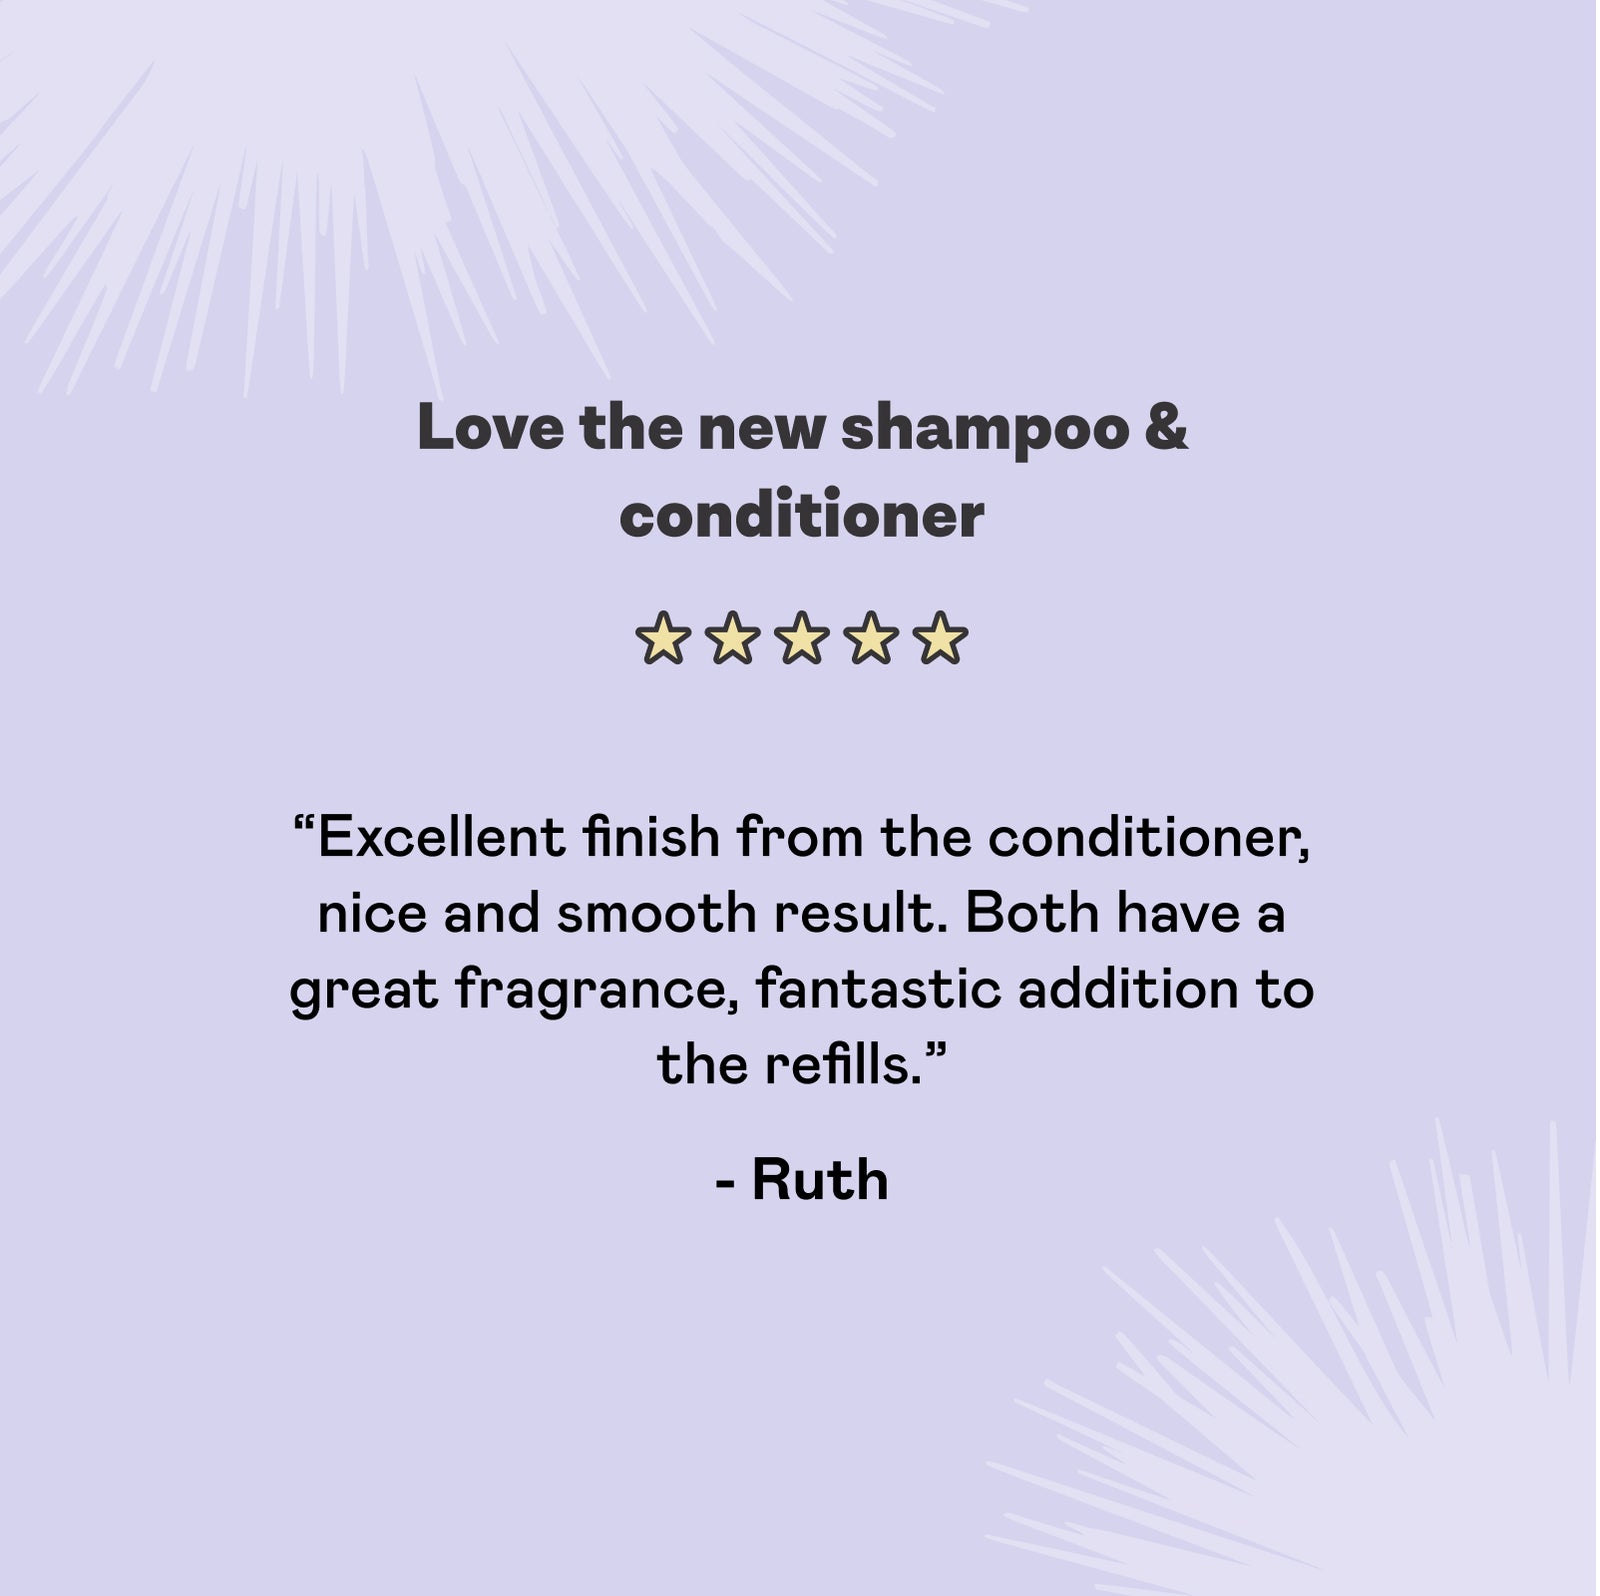 Shampoo & Conditioner Refill Set